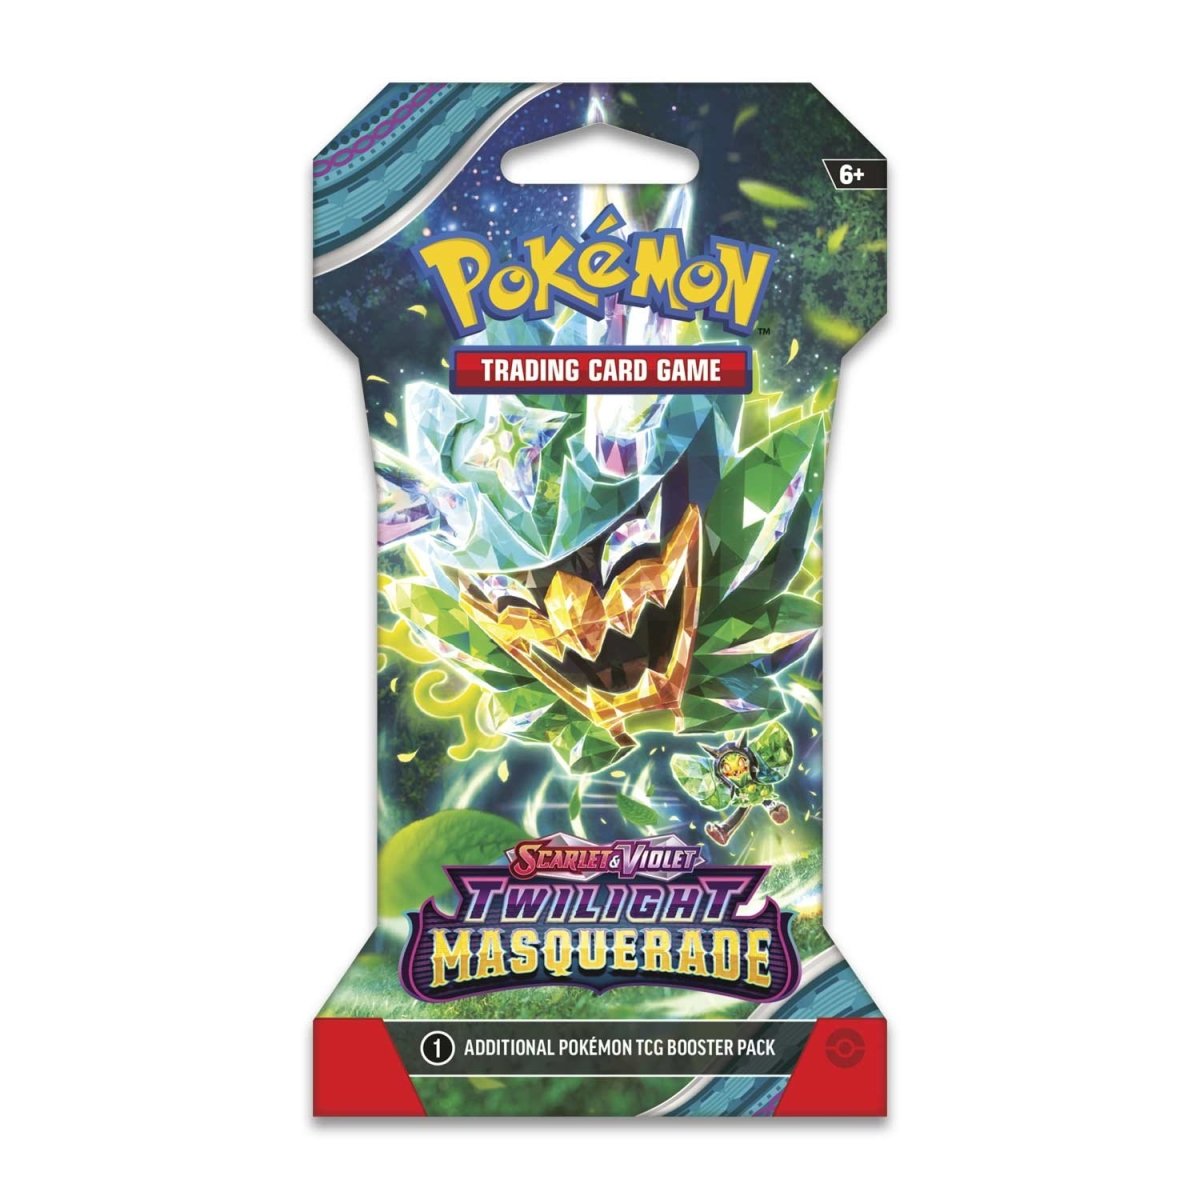 Pokémon Paquet Booster Emballage Carton (10 Cartes) - Scarlet & Violet - Twilight Masquerade - Pupitar - 0